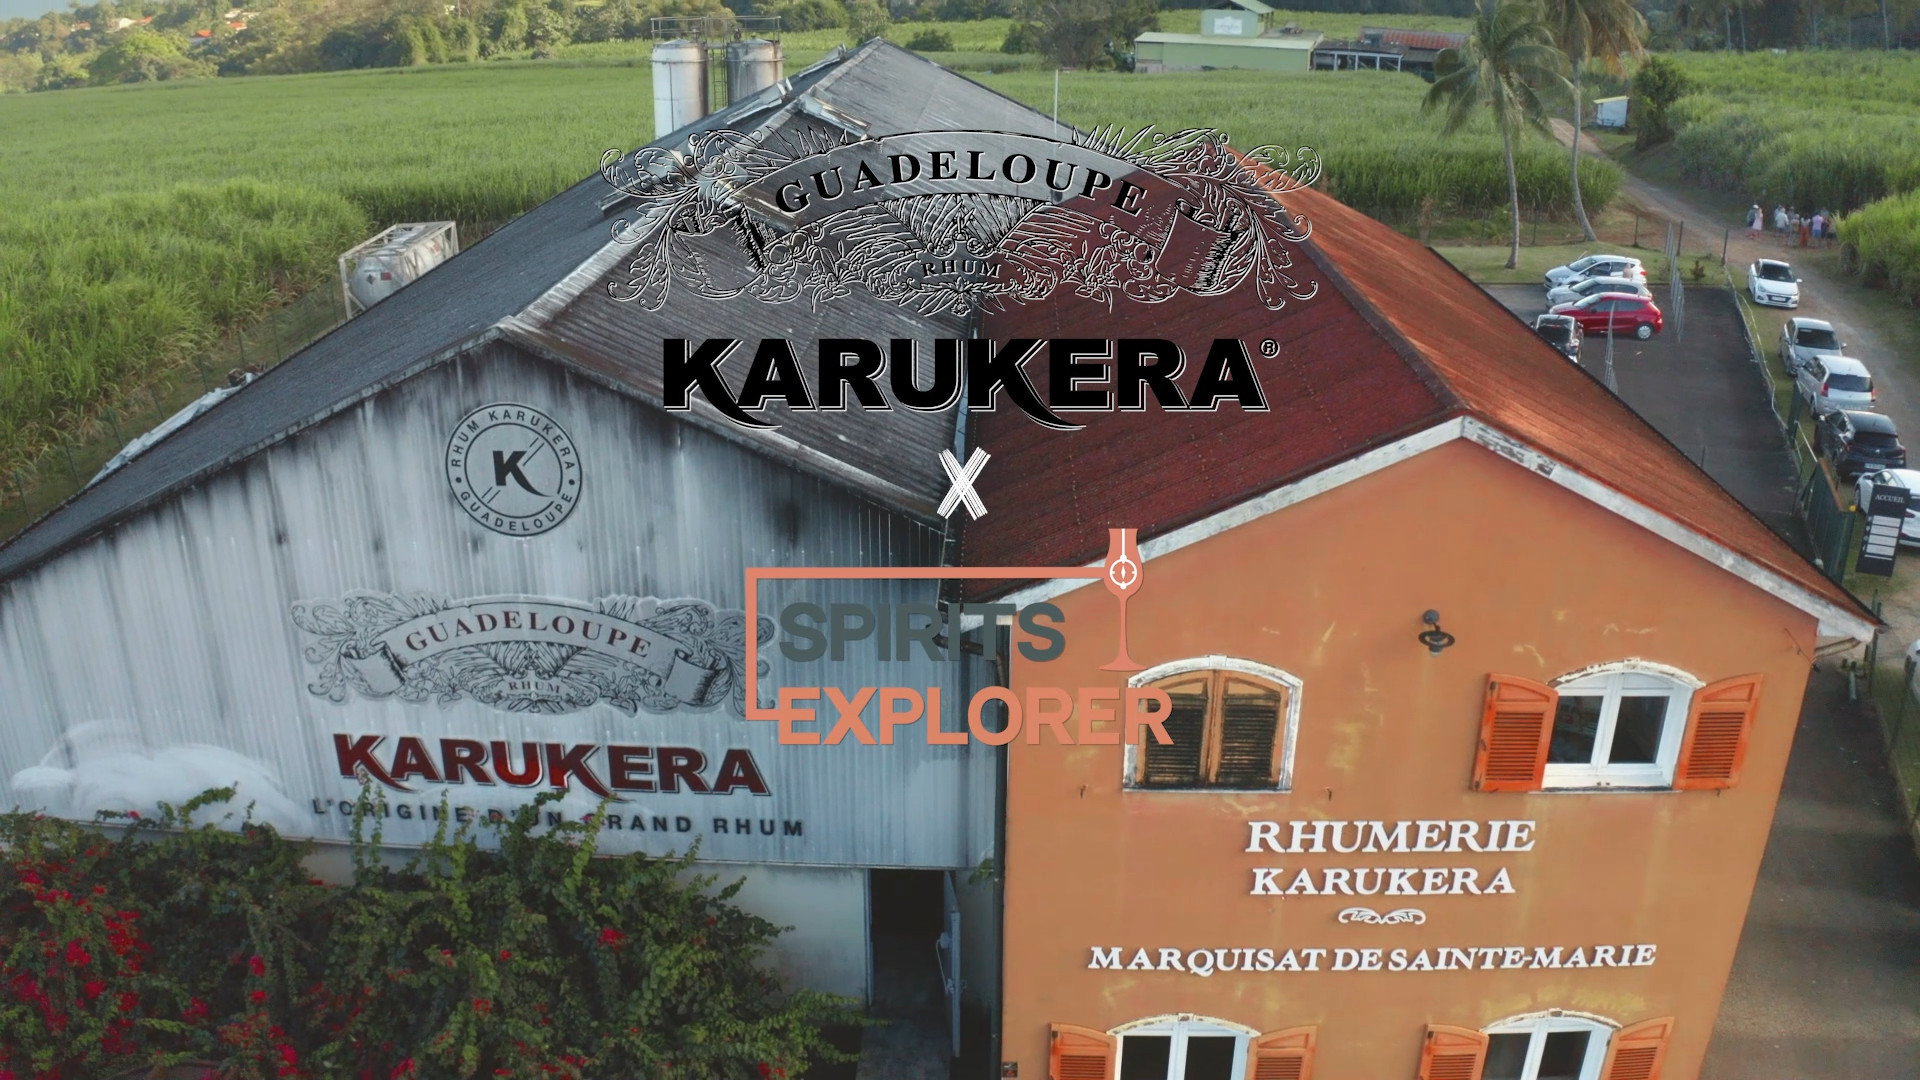 Spirits Explorer in Guadeloupe Episode 7 – Karukera